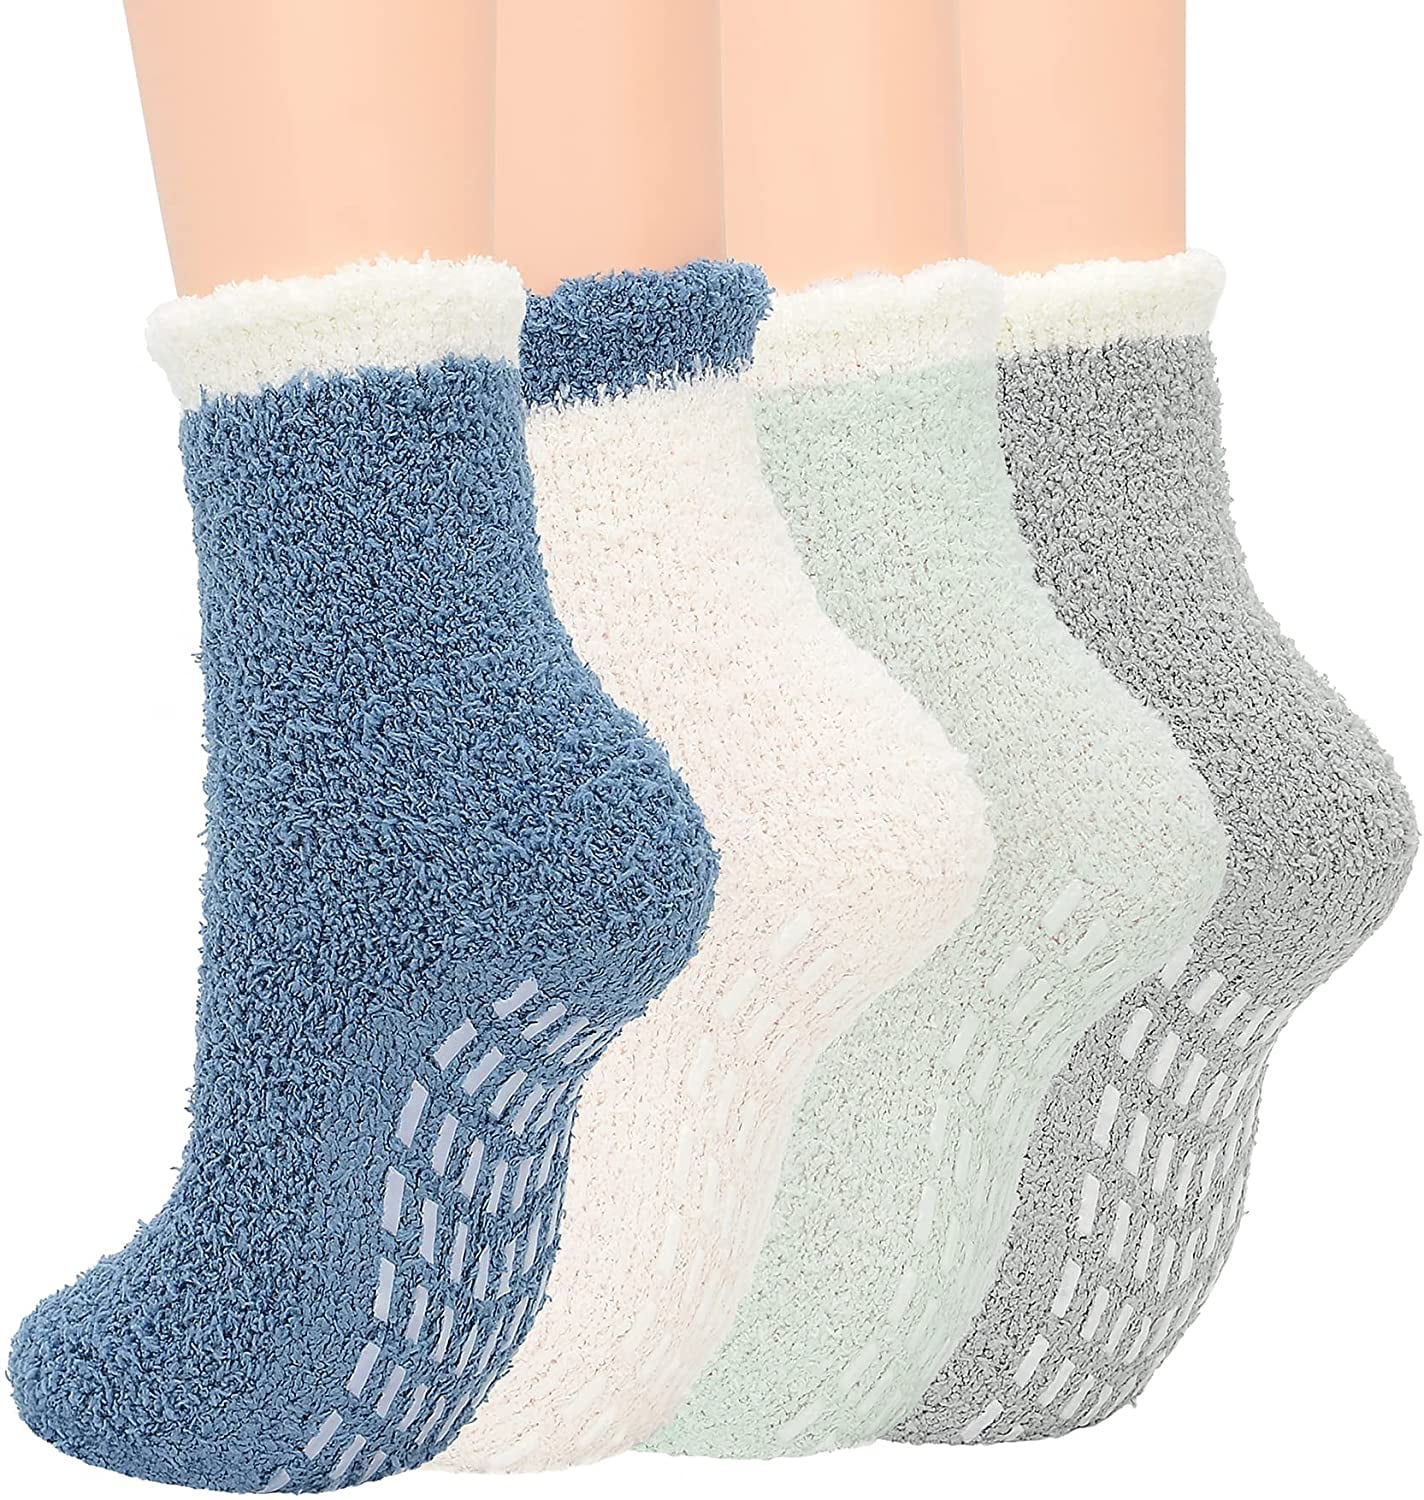 Zando Non Skid Socks Womens Low Cut Hospital Socks with Grips for